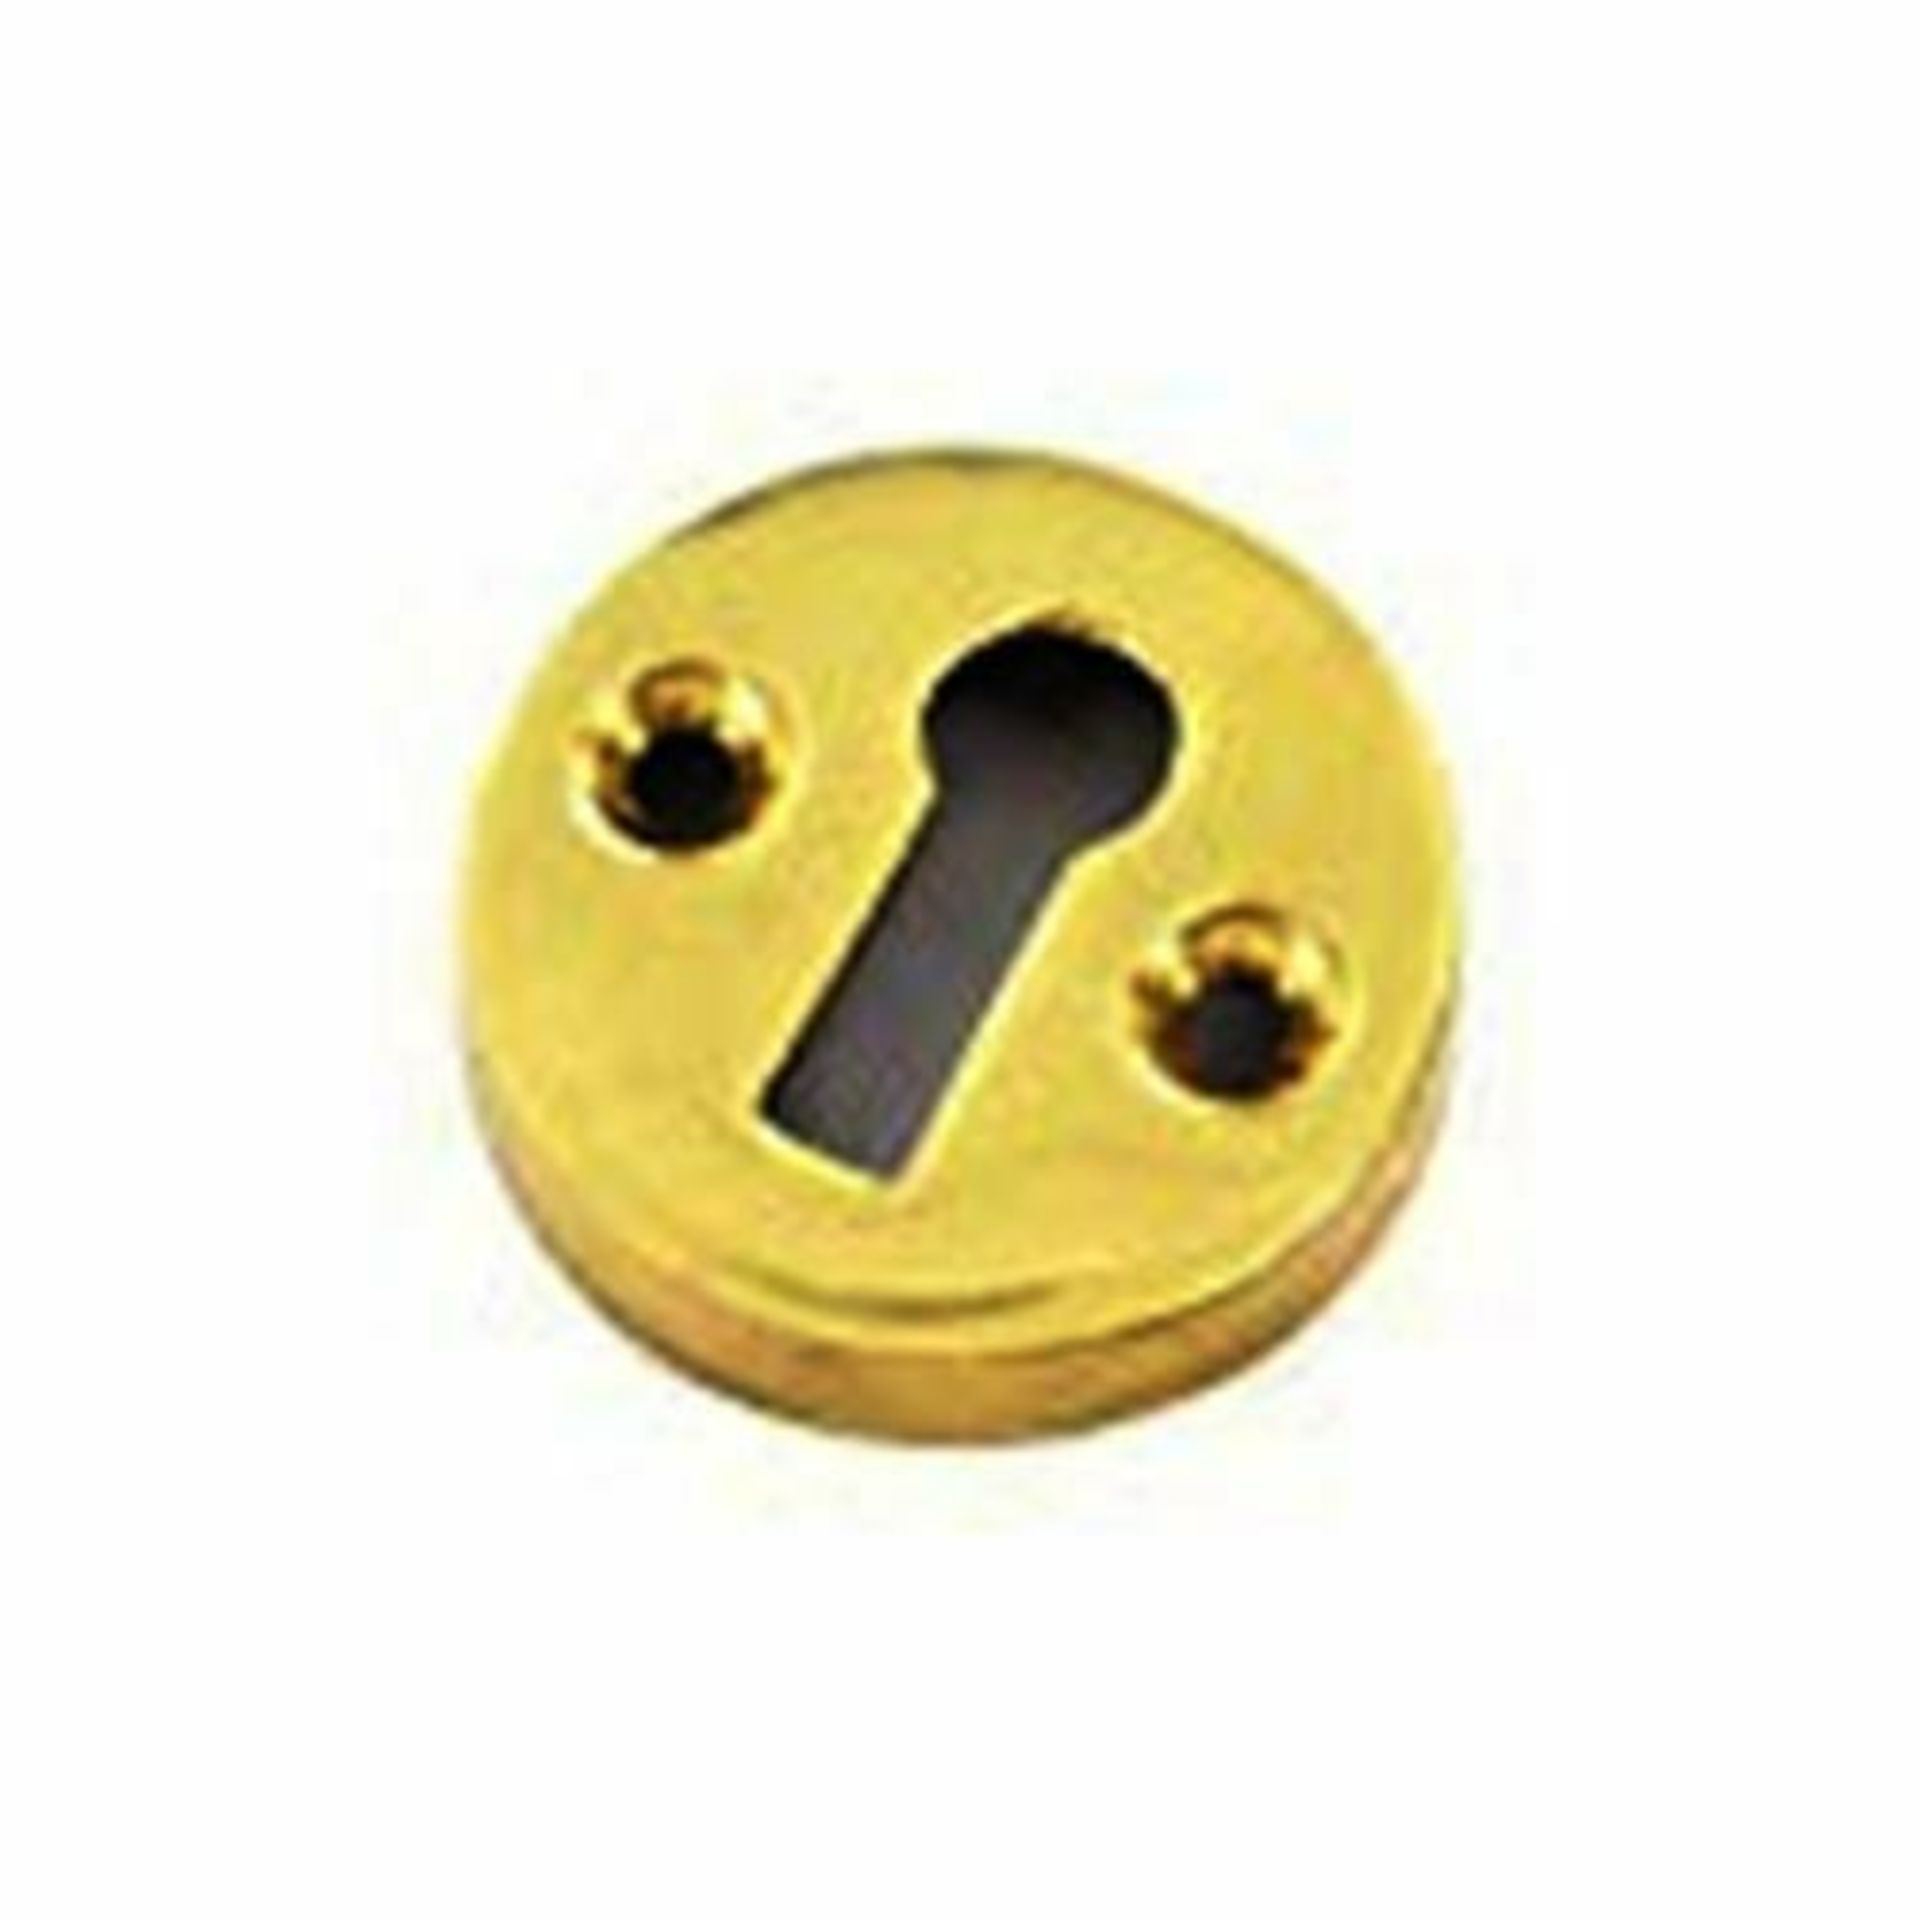 10x Victorian Brass Keyhole Escutcheon Lock Cover Plate Open 35mm Key Hole